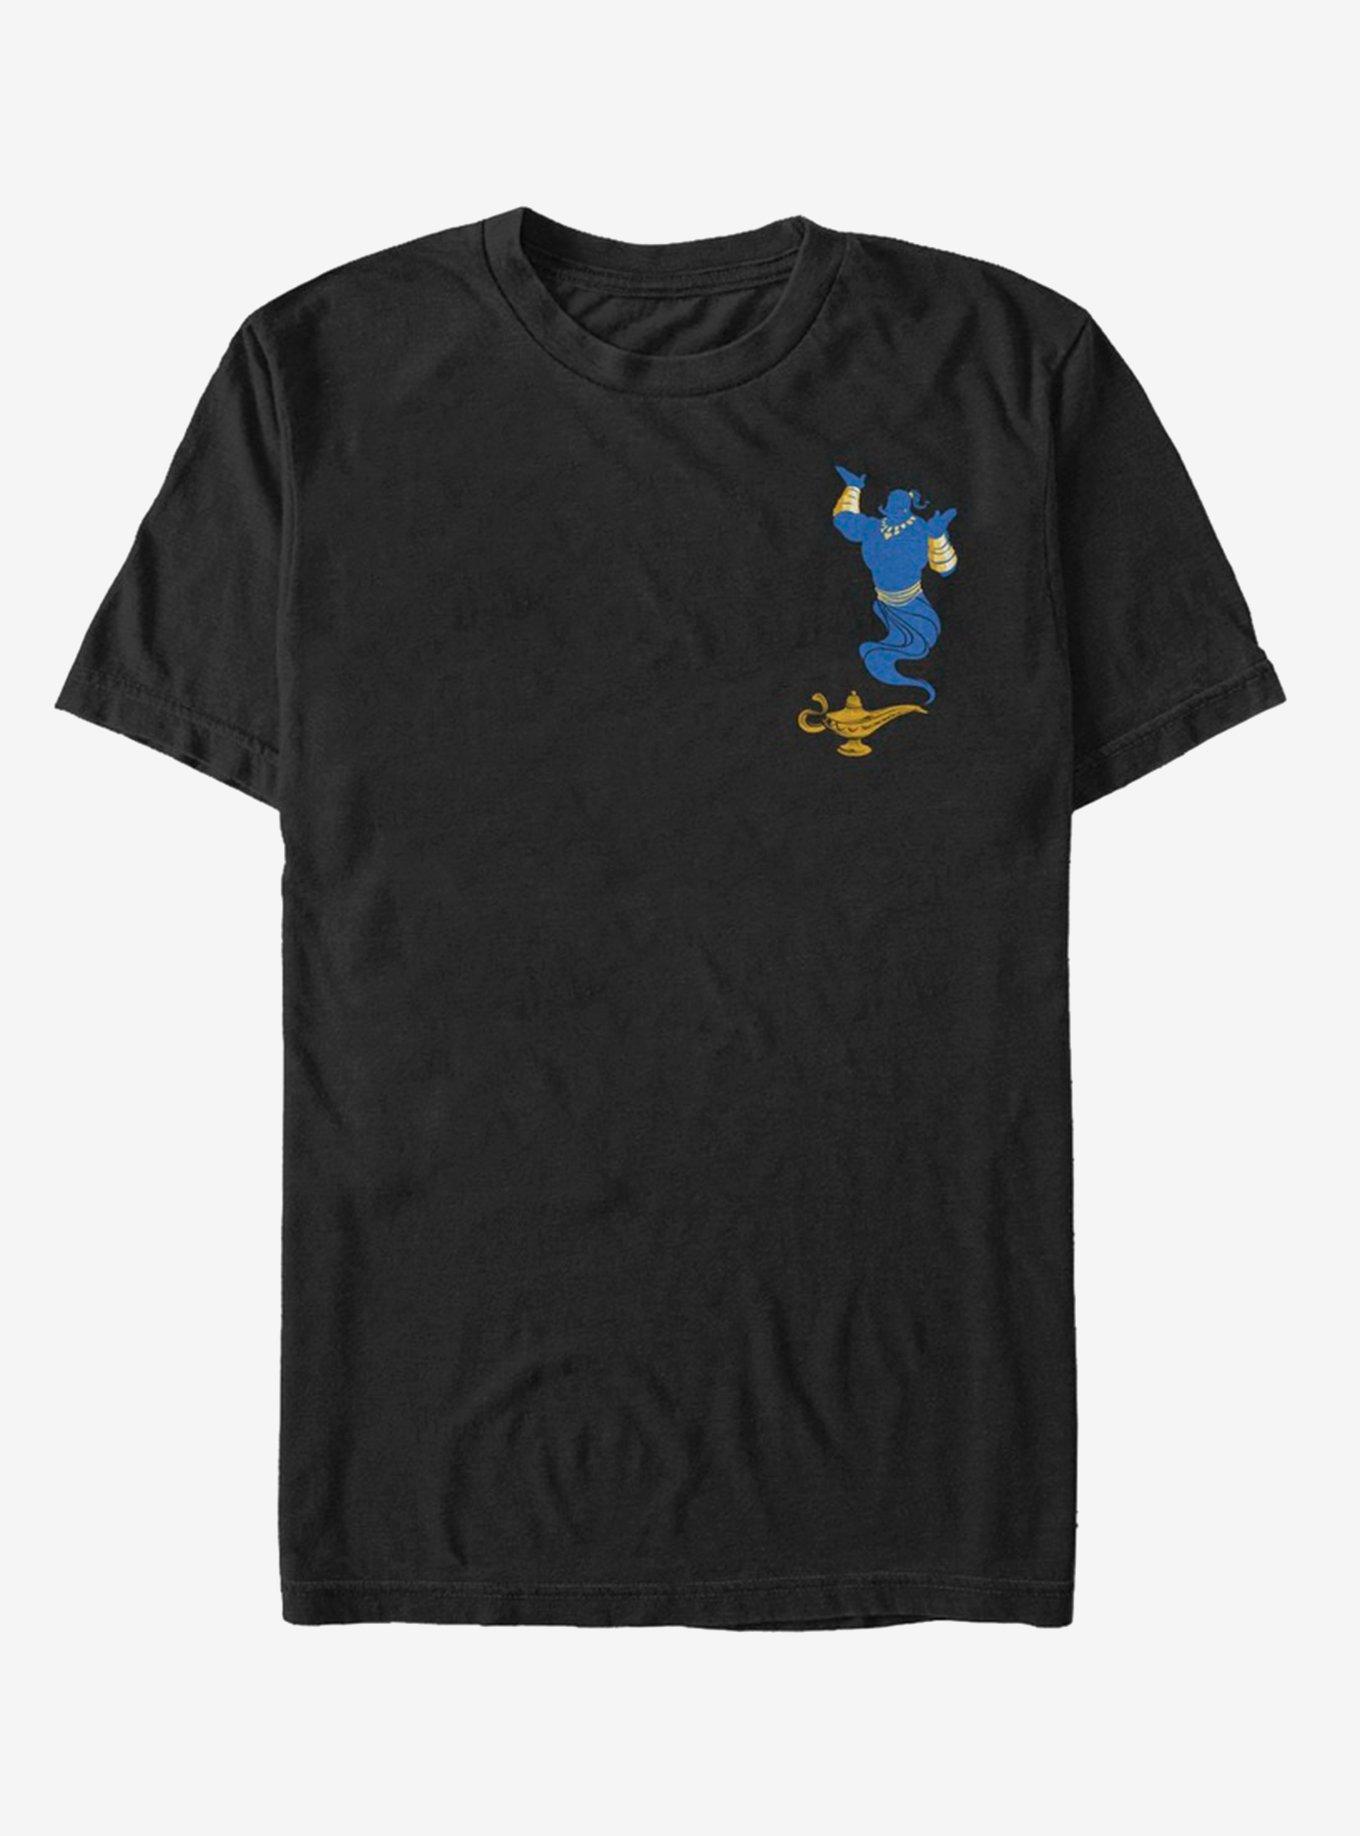 Disney Aladdin 2019 Pocket Lamp T-Shirt, BLACK, hi-res